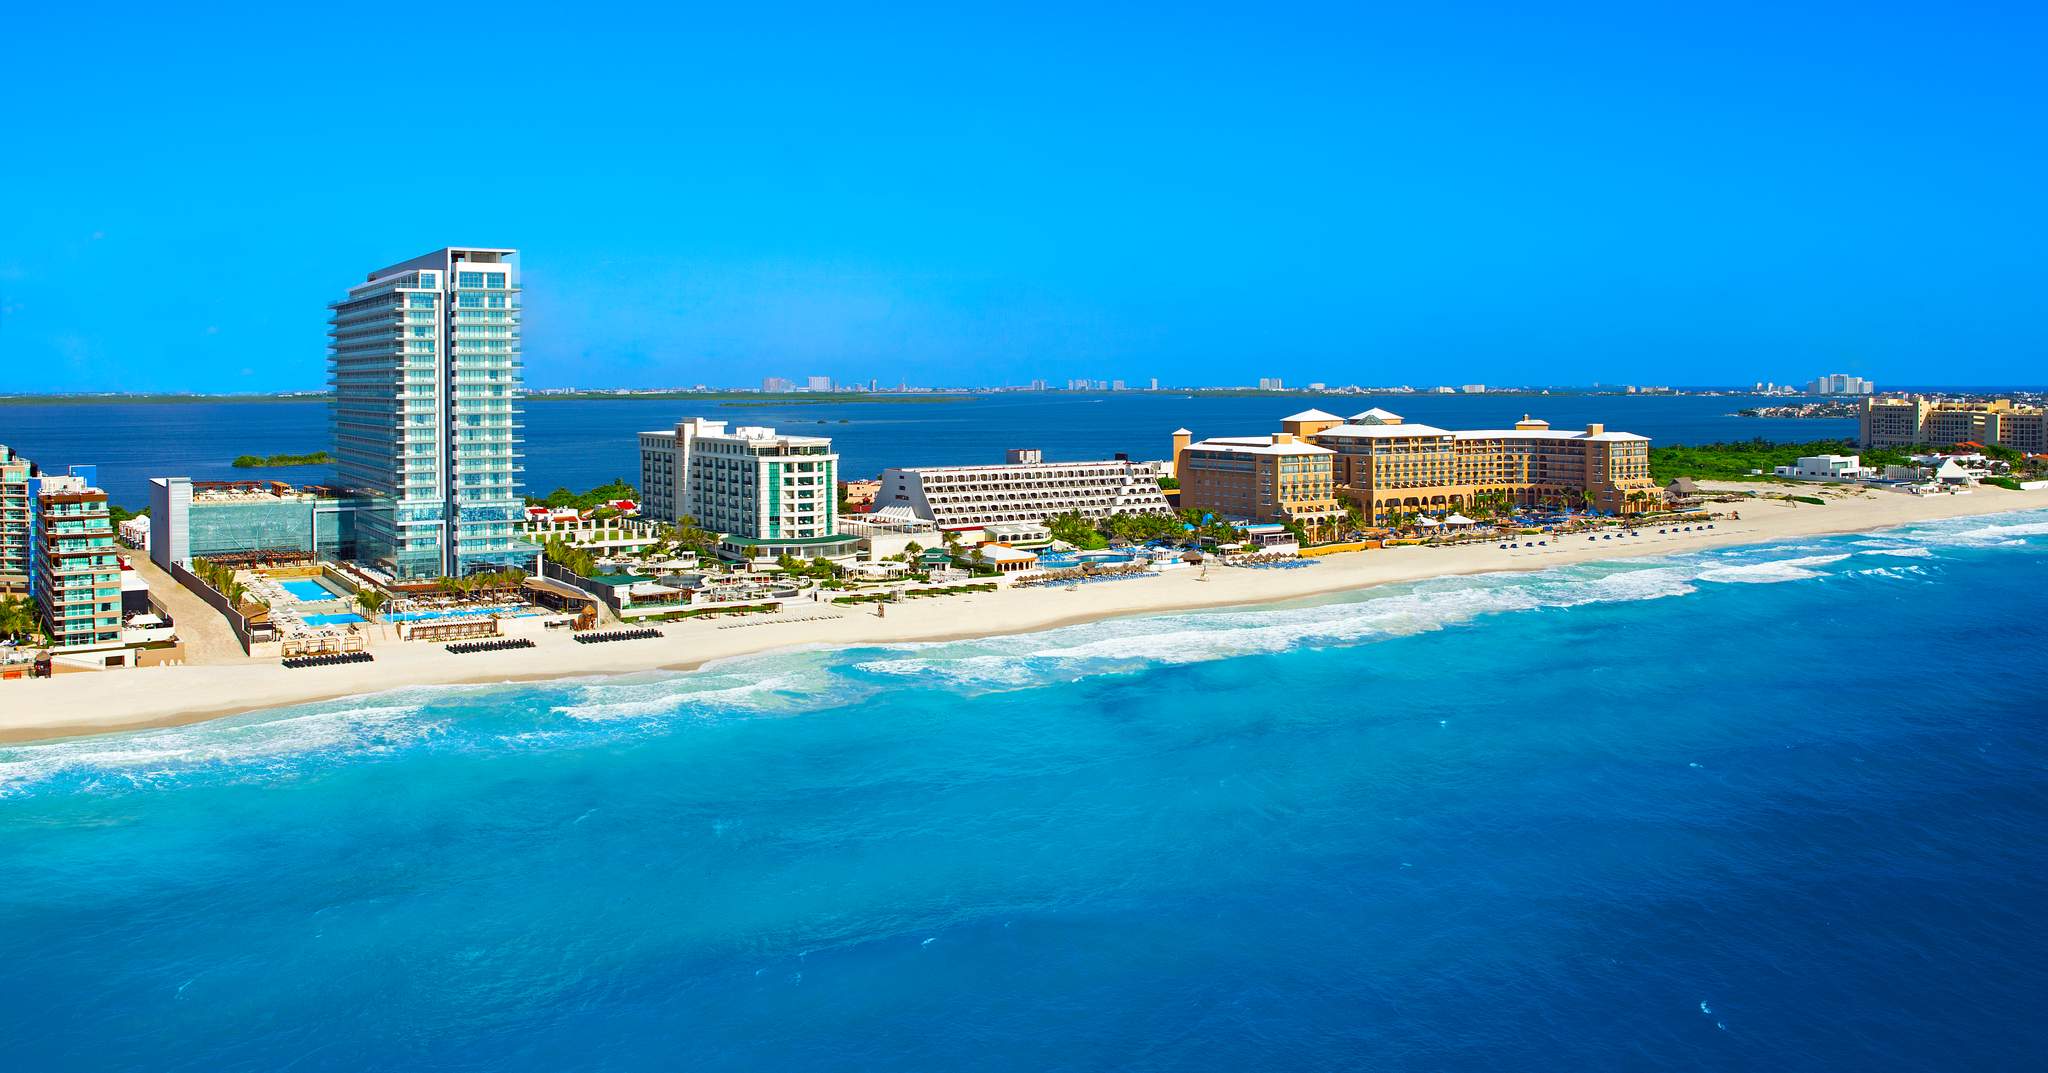 Secrets The Vine Cancun in Cancun, Mexico - All Inclusive Deals